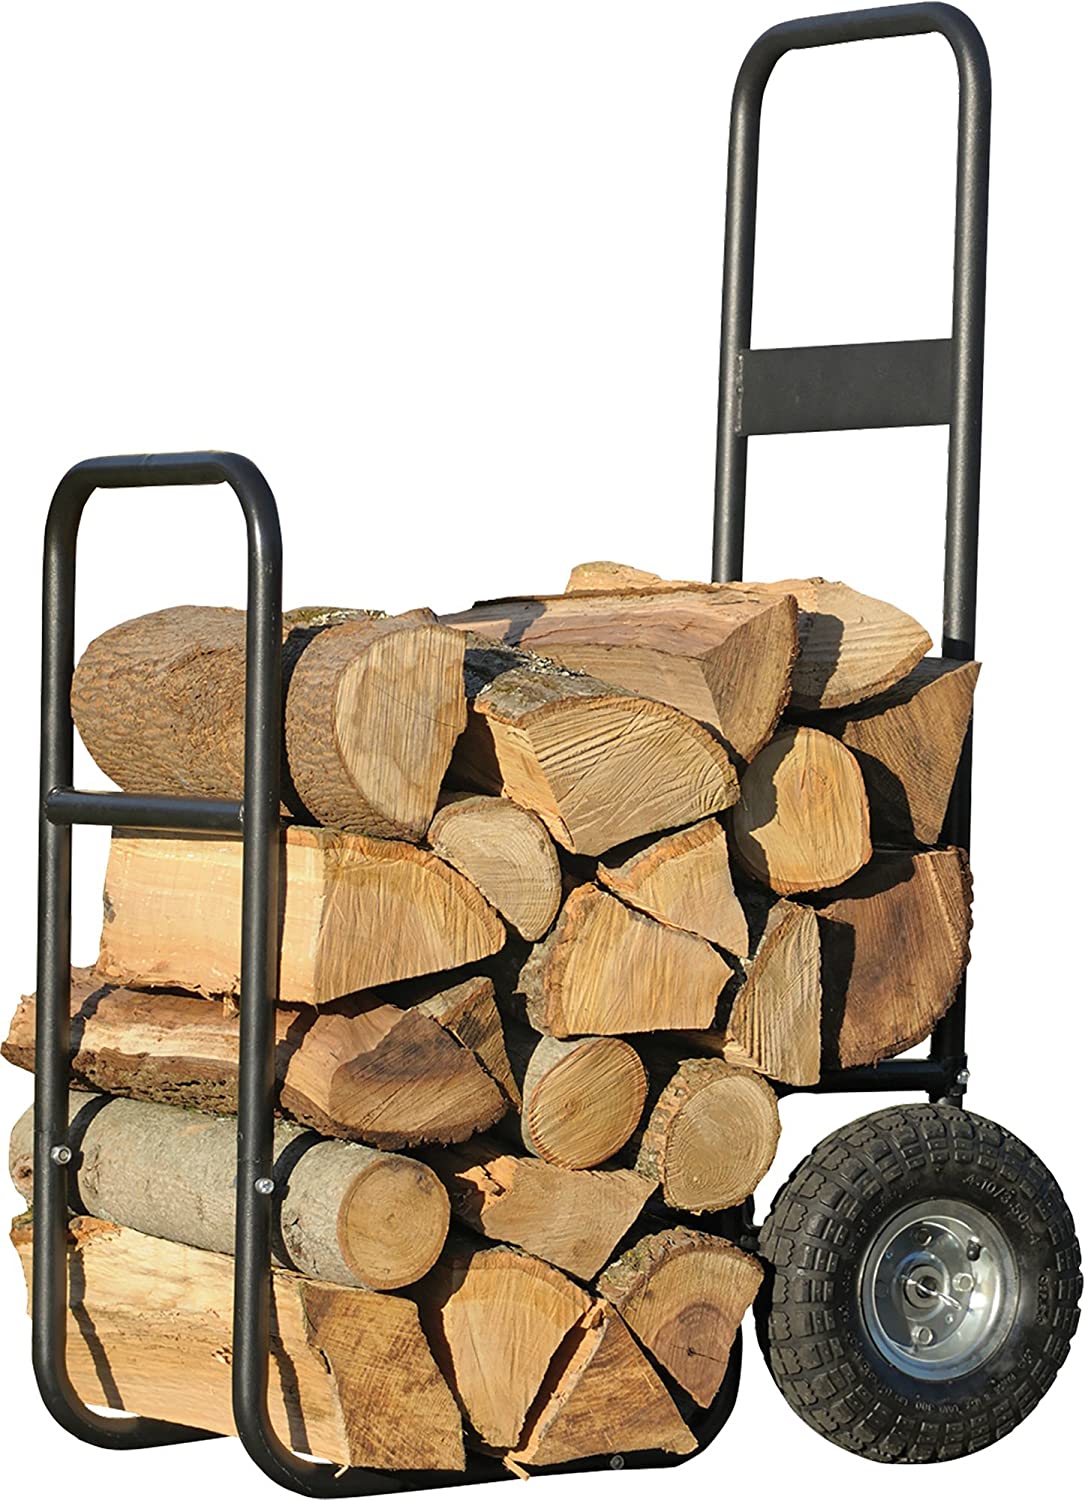 ShelterLogic Haul It Wood Mover - Rolling Firewood Carrier Cart - Senior.com Firewood Carrier